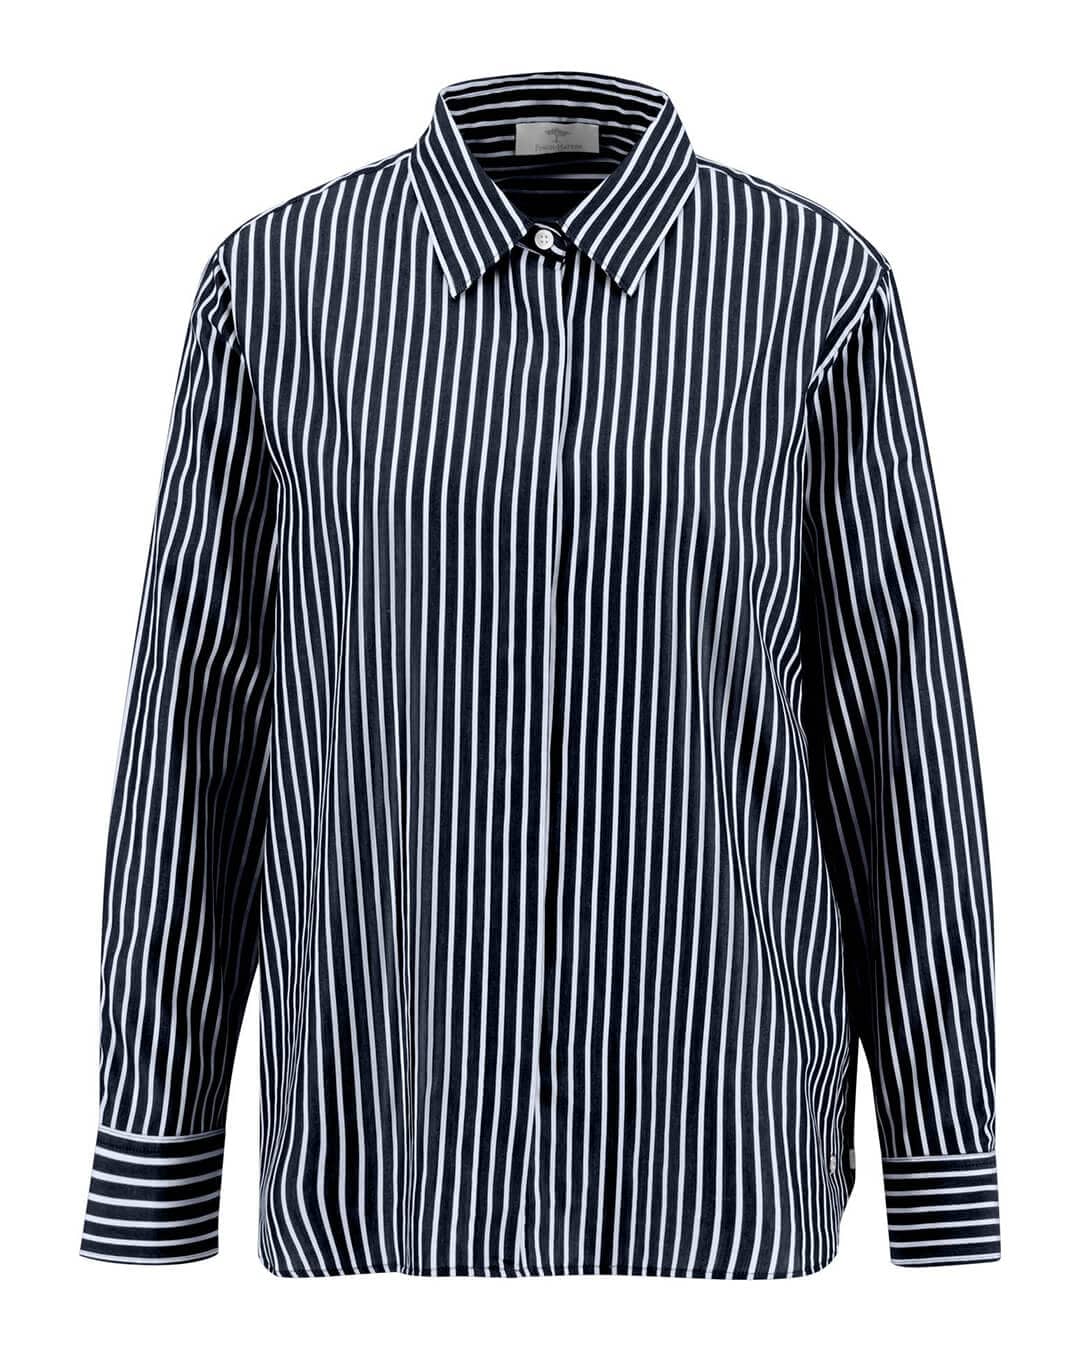 Fynch-Hatton Shirts Fynch-Hatton Navy Striped Shirt